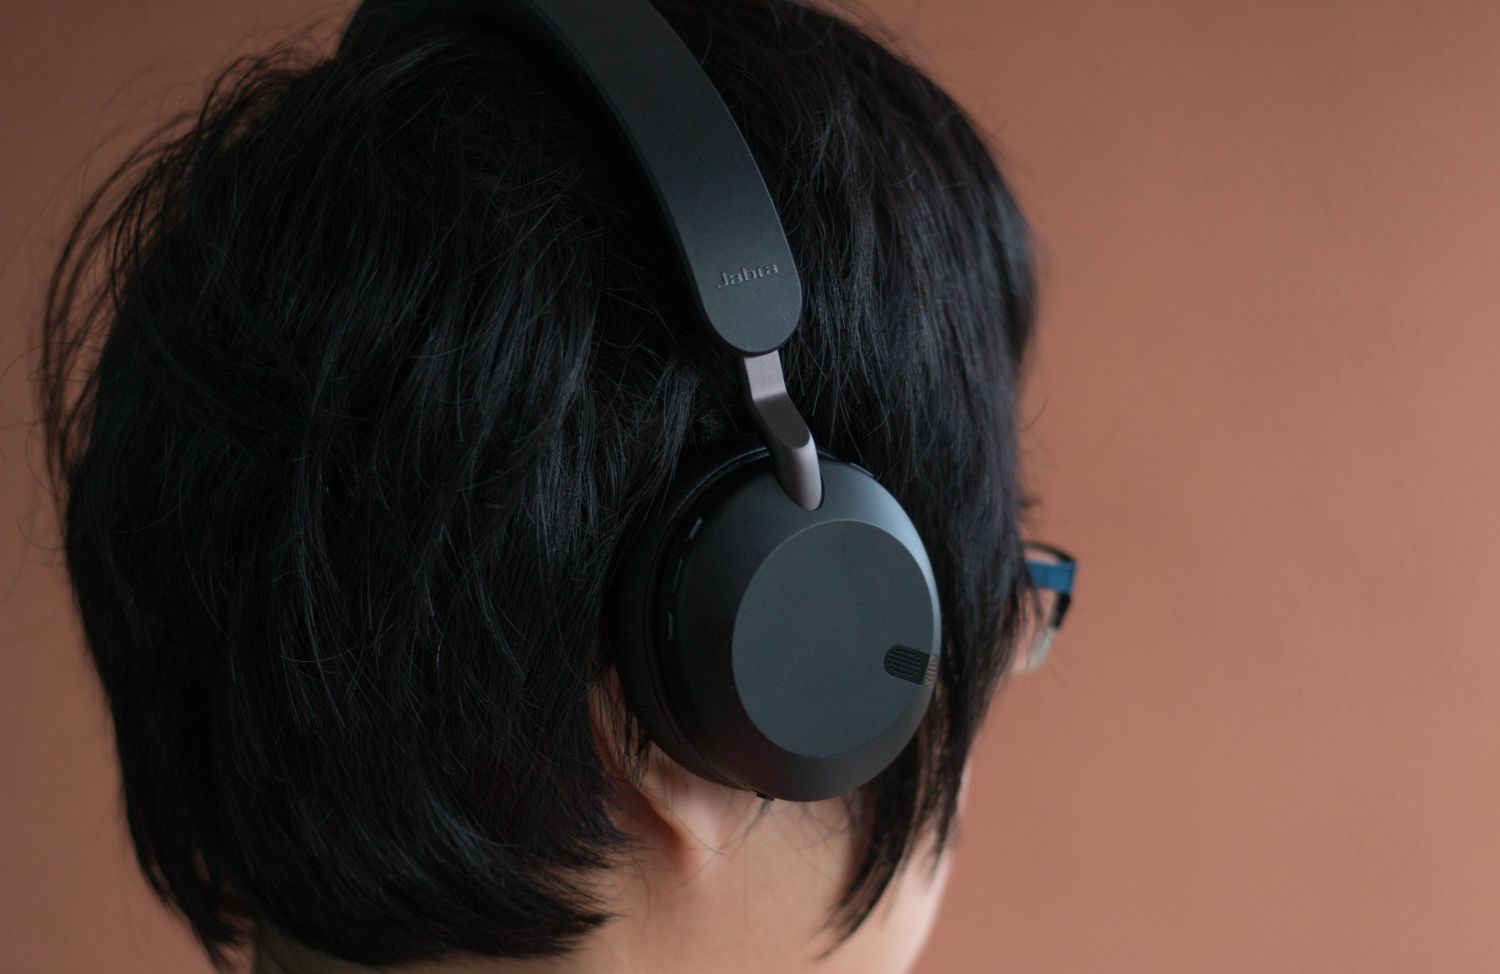 Jabra Elite 45h Review: Good sounding headphones without